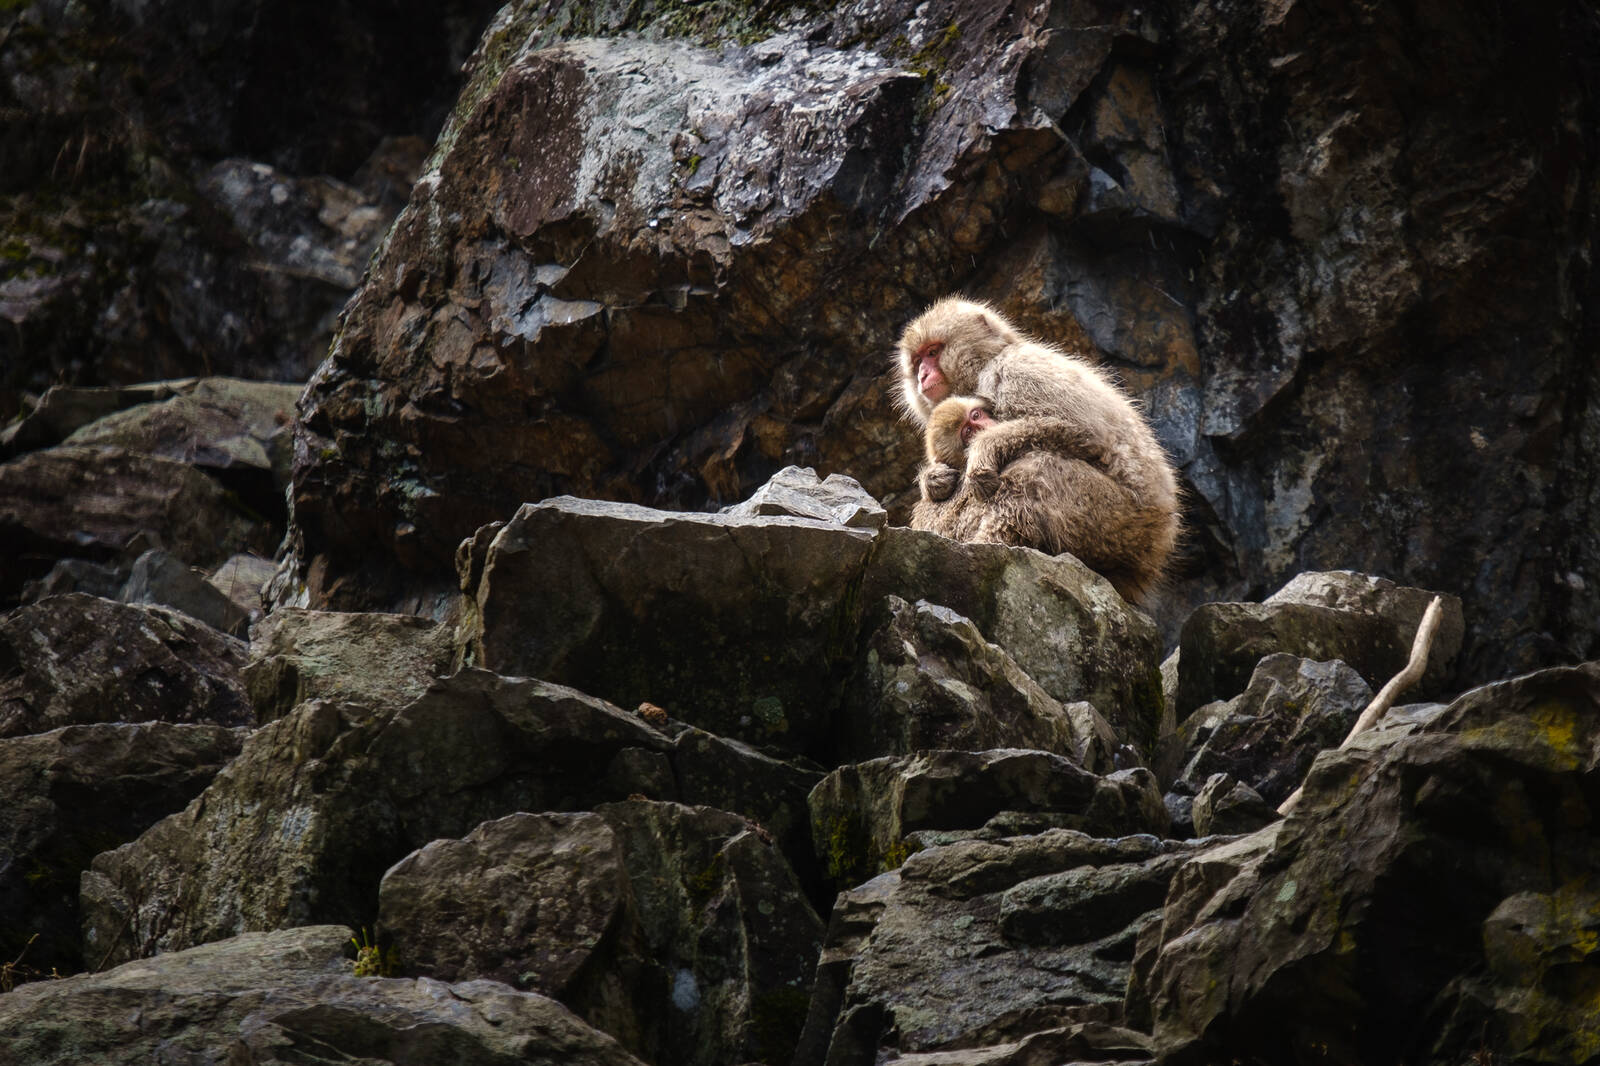 Image of Jigokudani Monkey Park by Darlene Hildebrandt